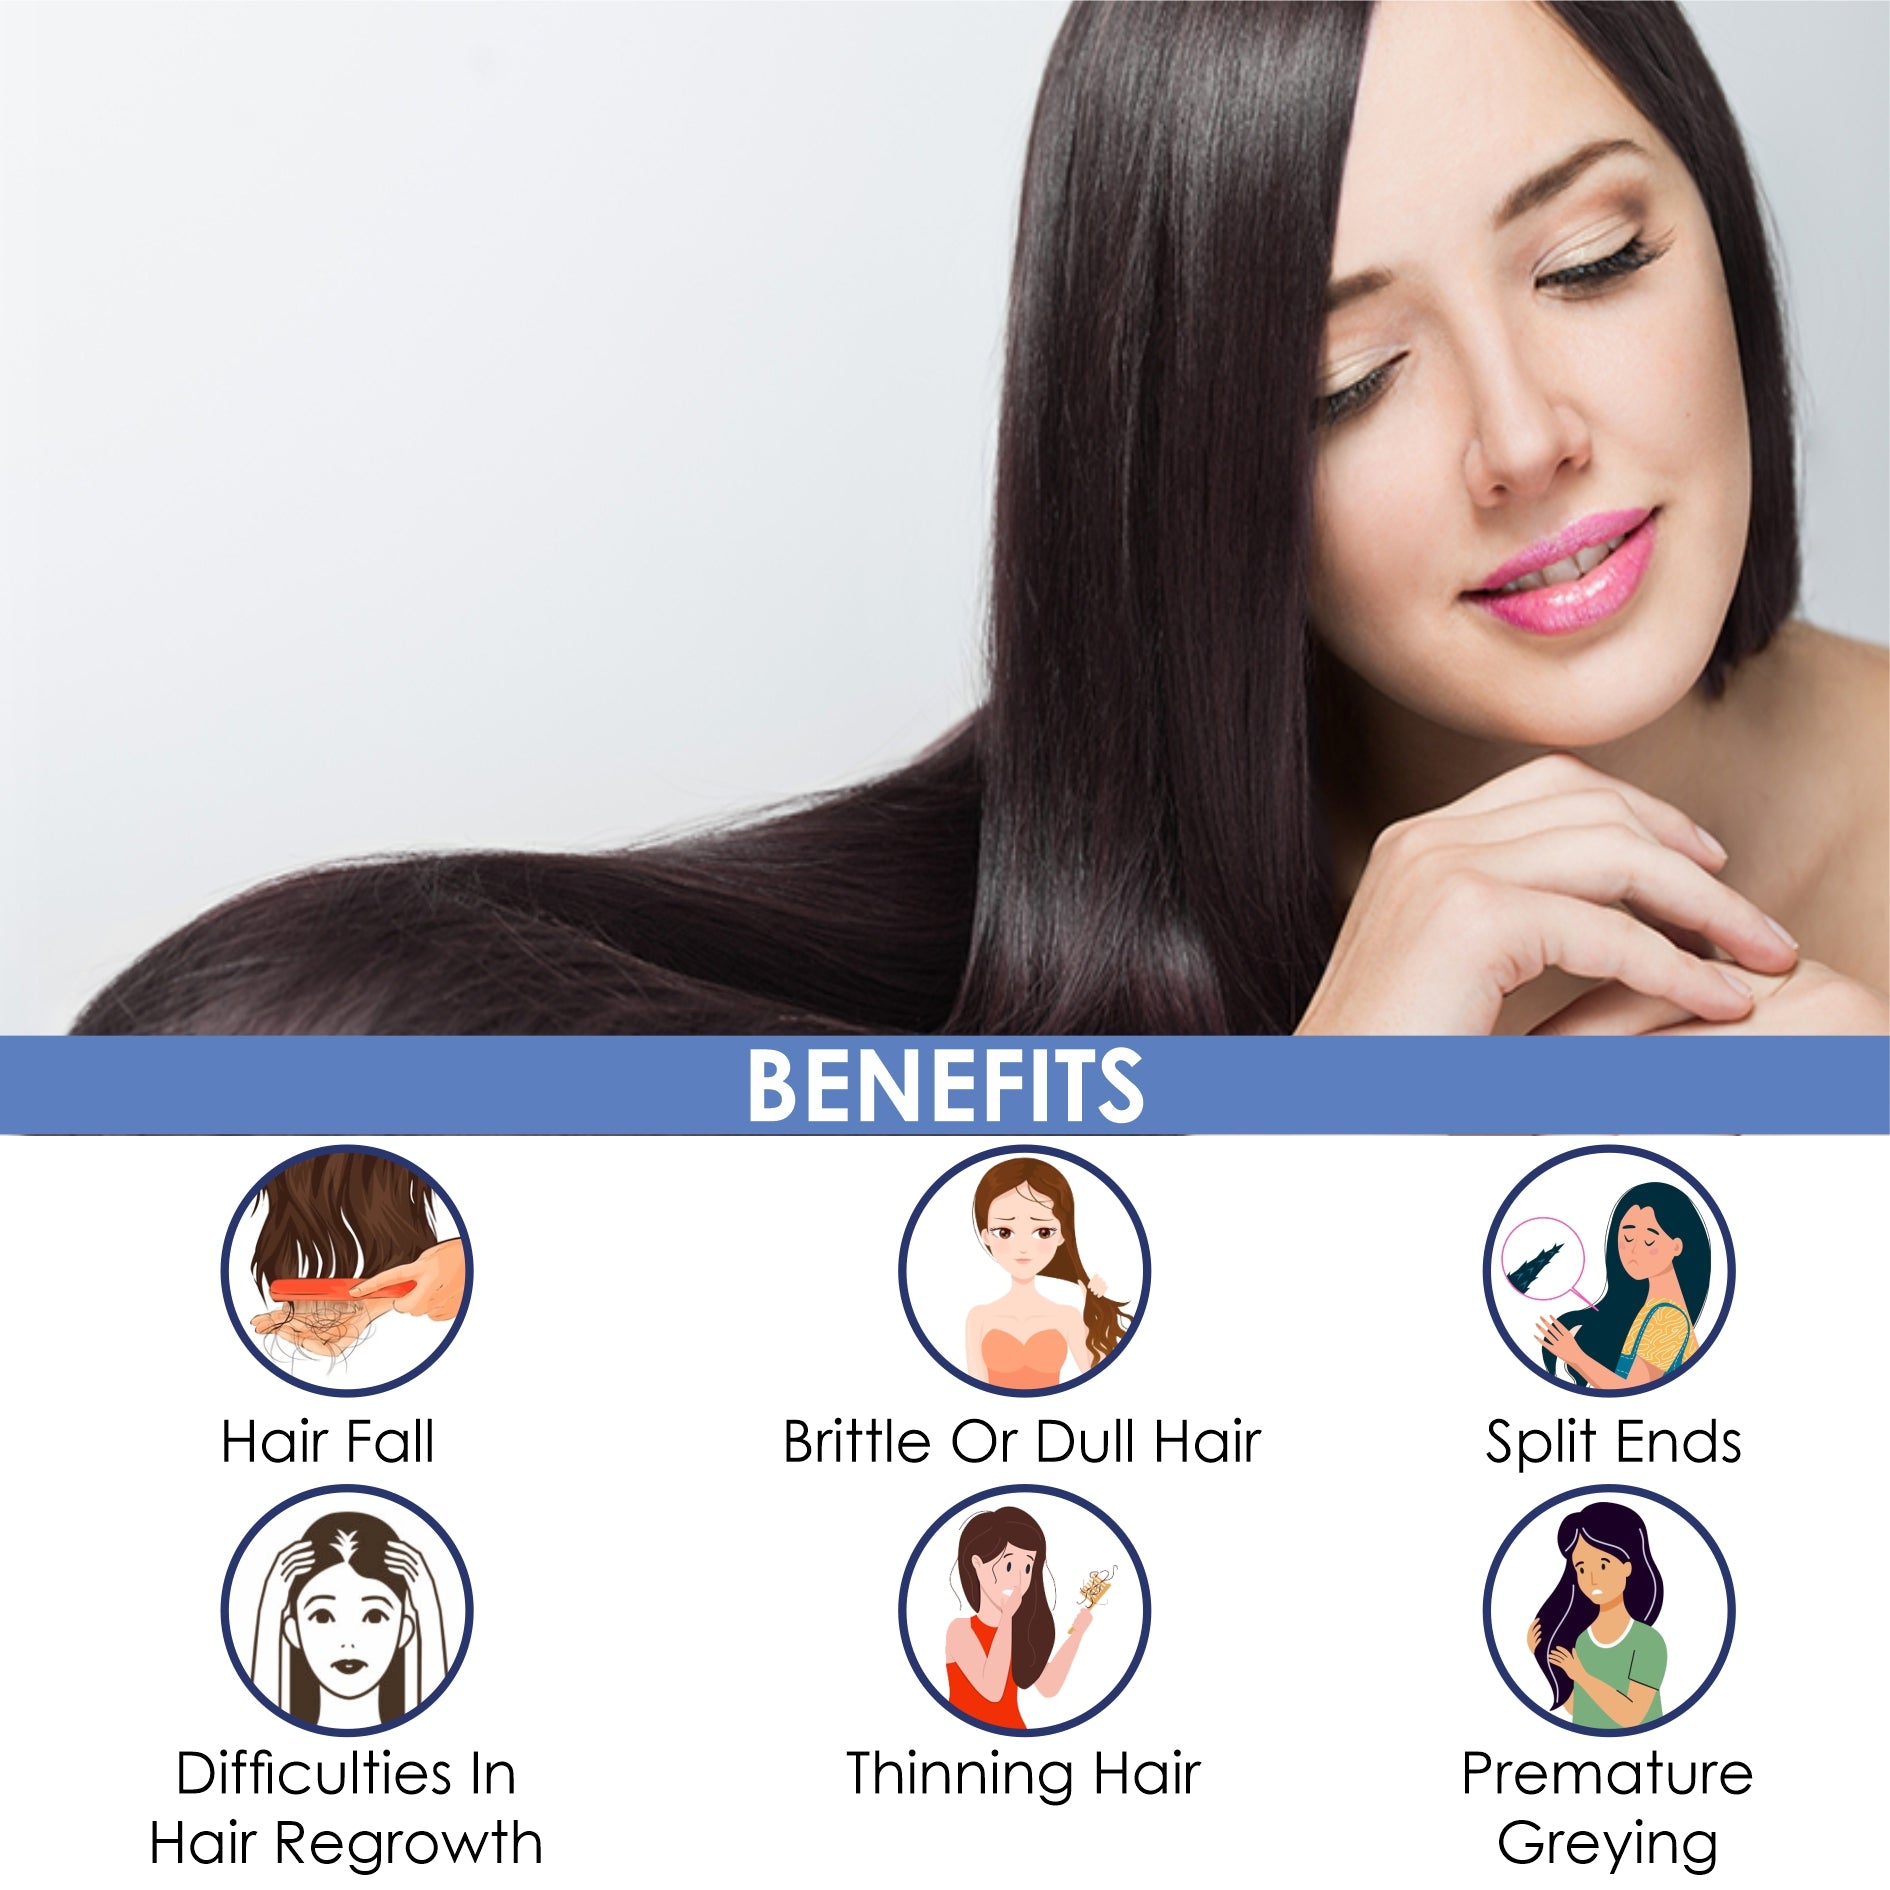 Keshya Hair Nutrition Supplement | Improves Scalp Health | Stimulate hair follicles | Prevents hair fall | Promotes hair growth | 250mg Tablets